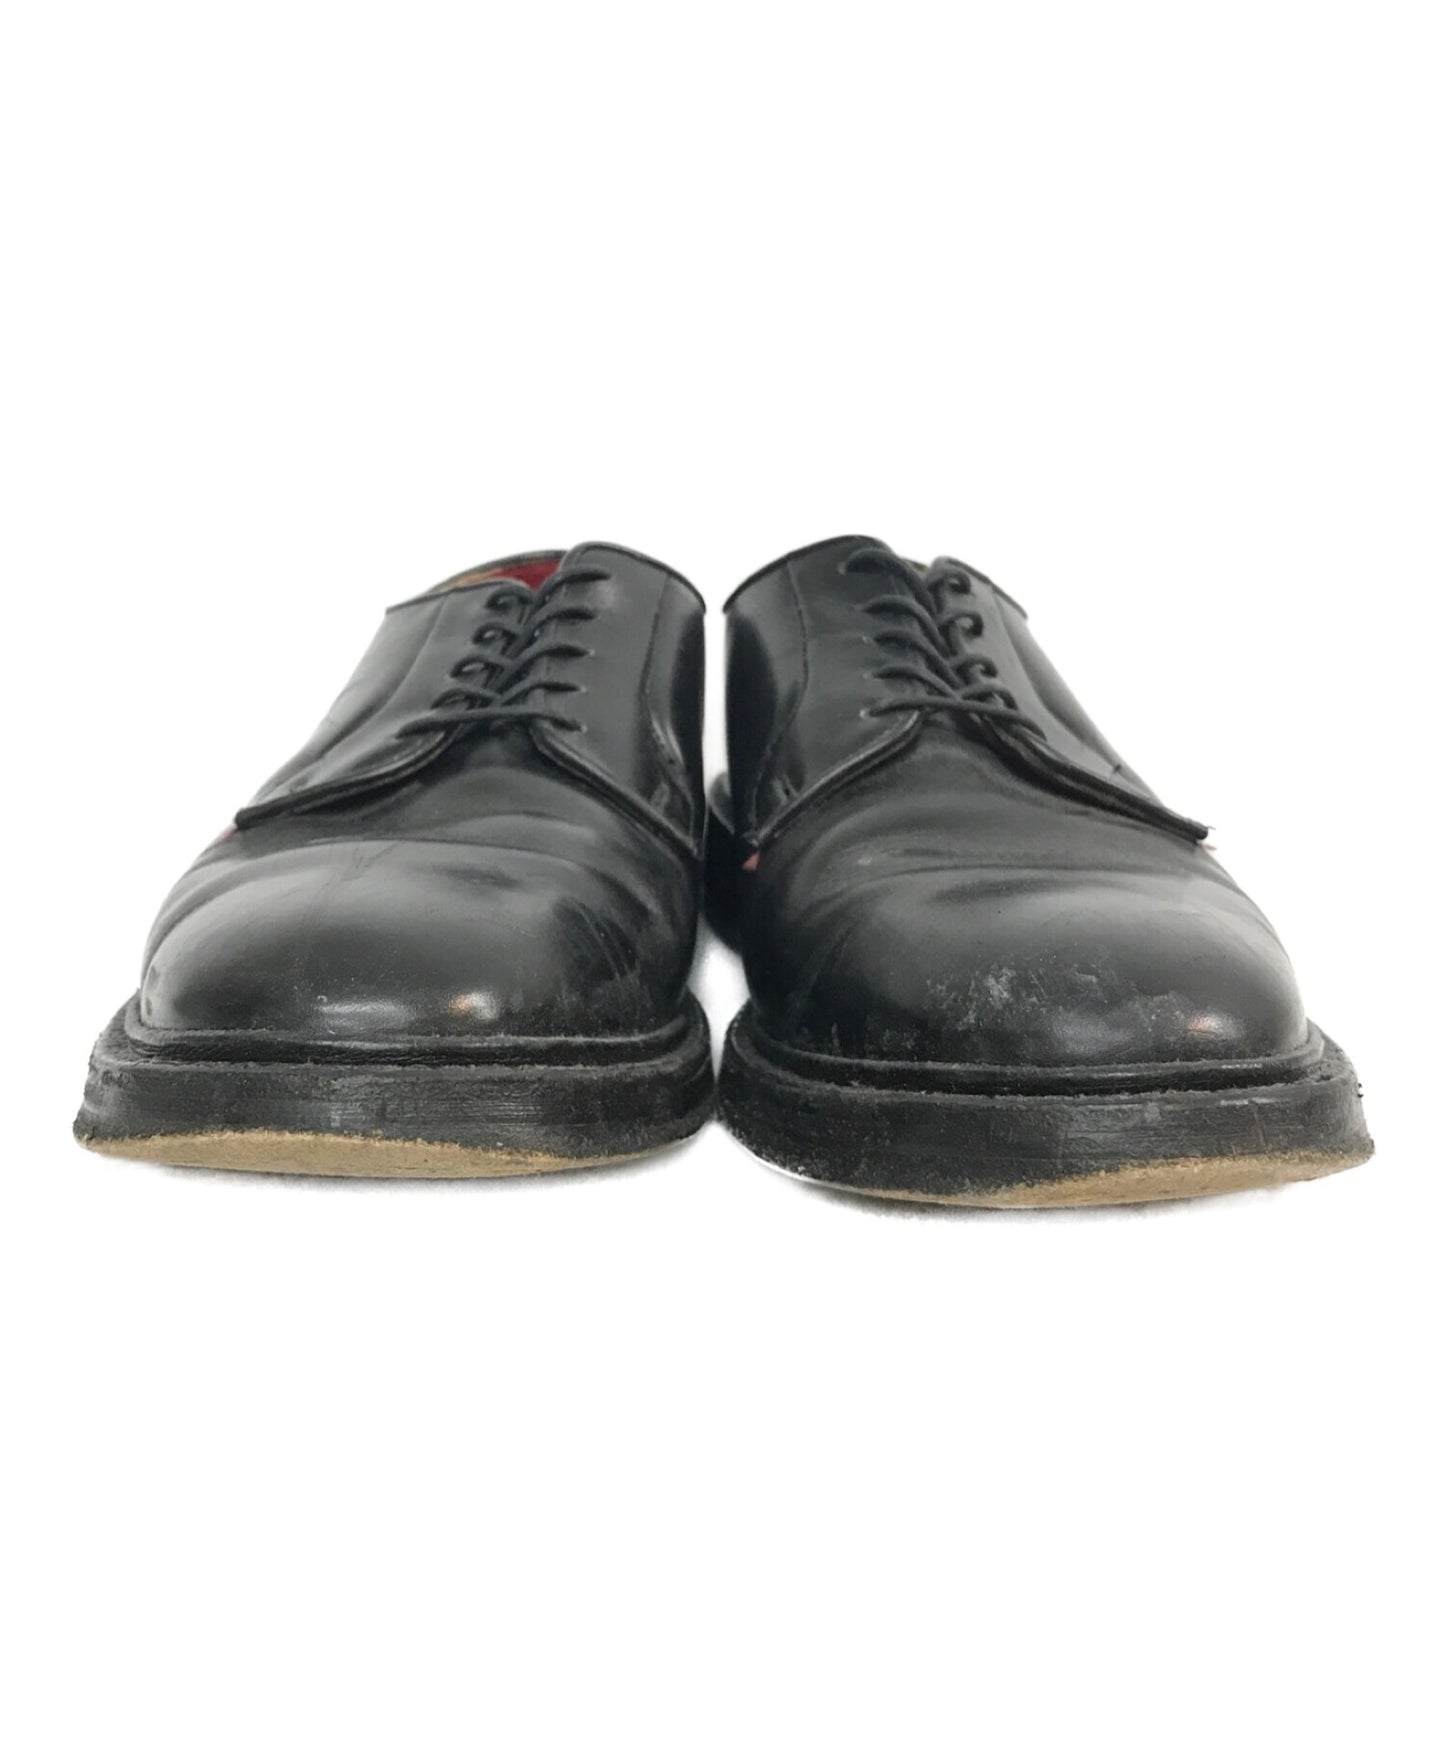 Comme des Garcons Junya Watanabe Man Leather Shoes / Plain Toe Shoes / Collaboration Model